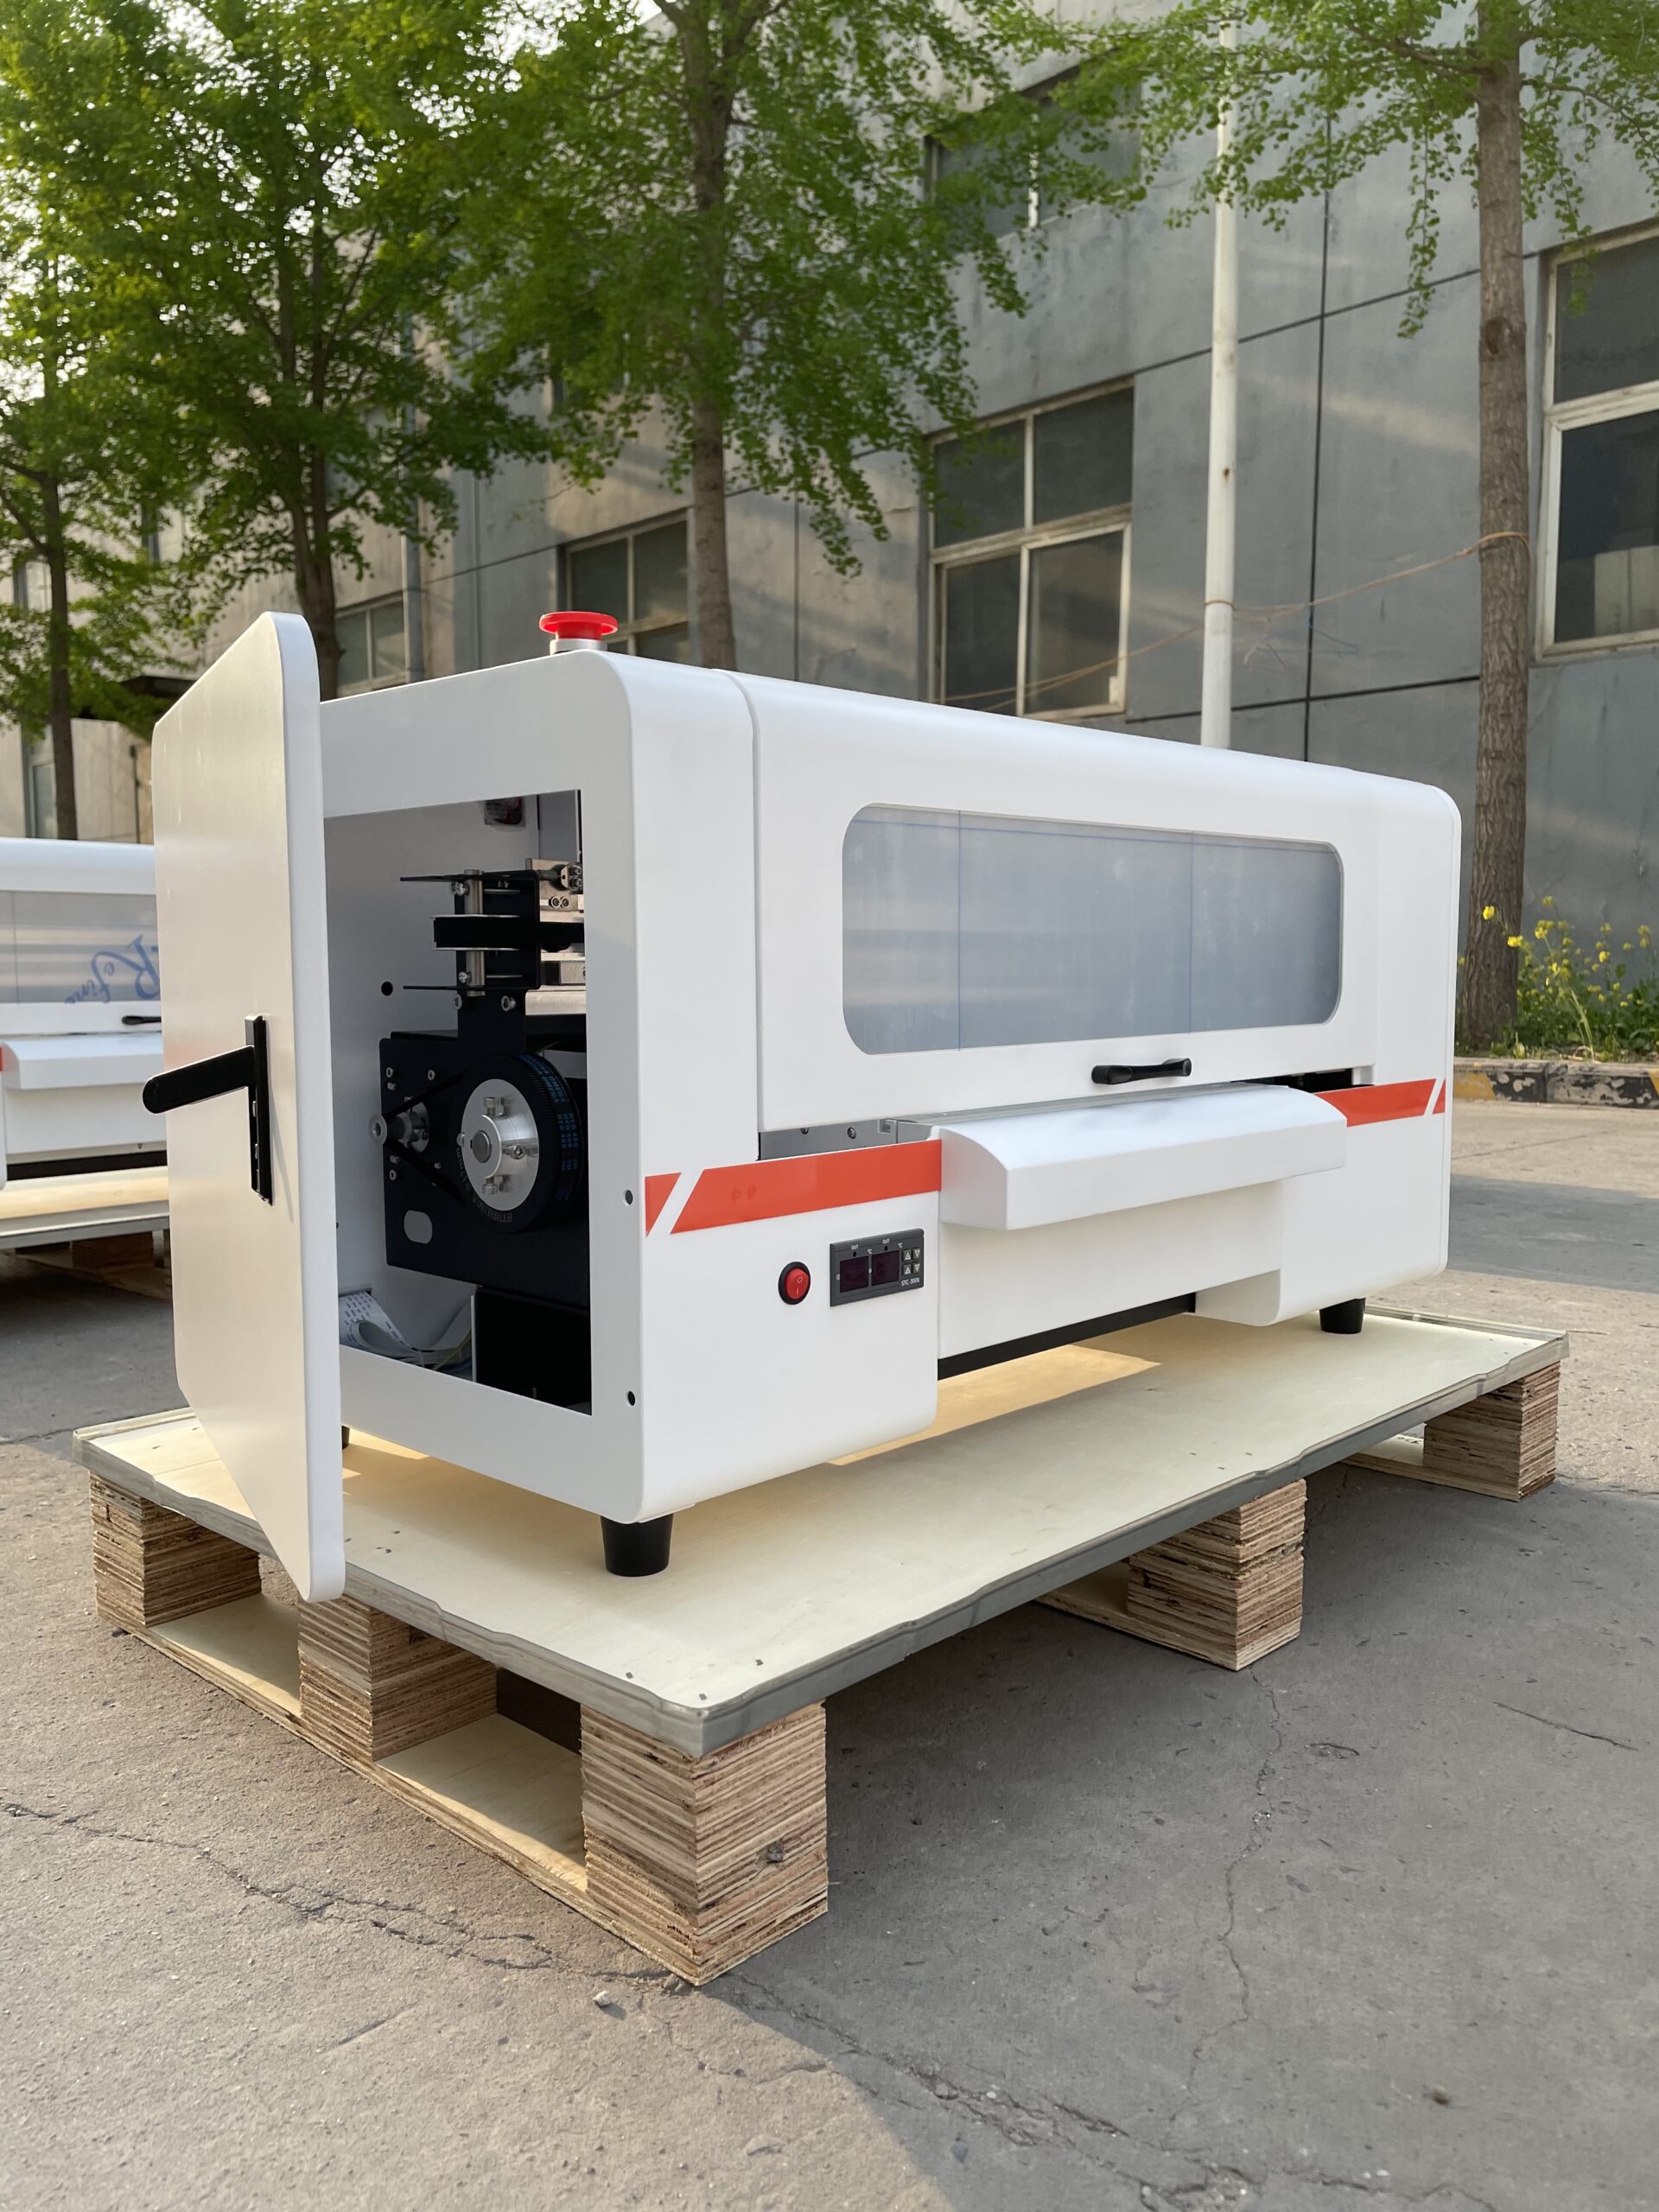 TODOjet Custom Transfer Printing Heat Press Machine T-Shirt Printing DTF Printer Heat Transfer PET Film Printer A3